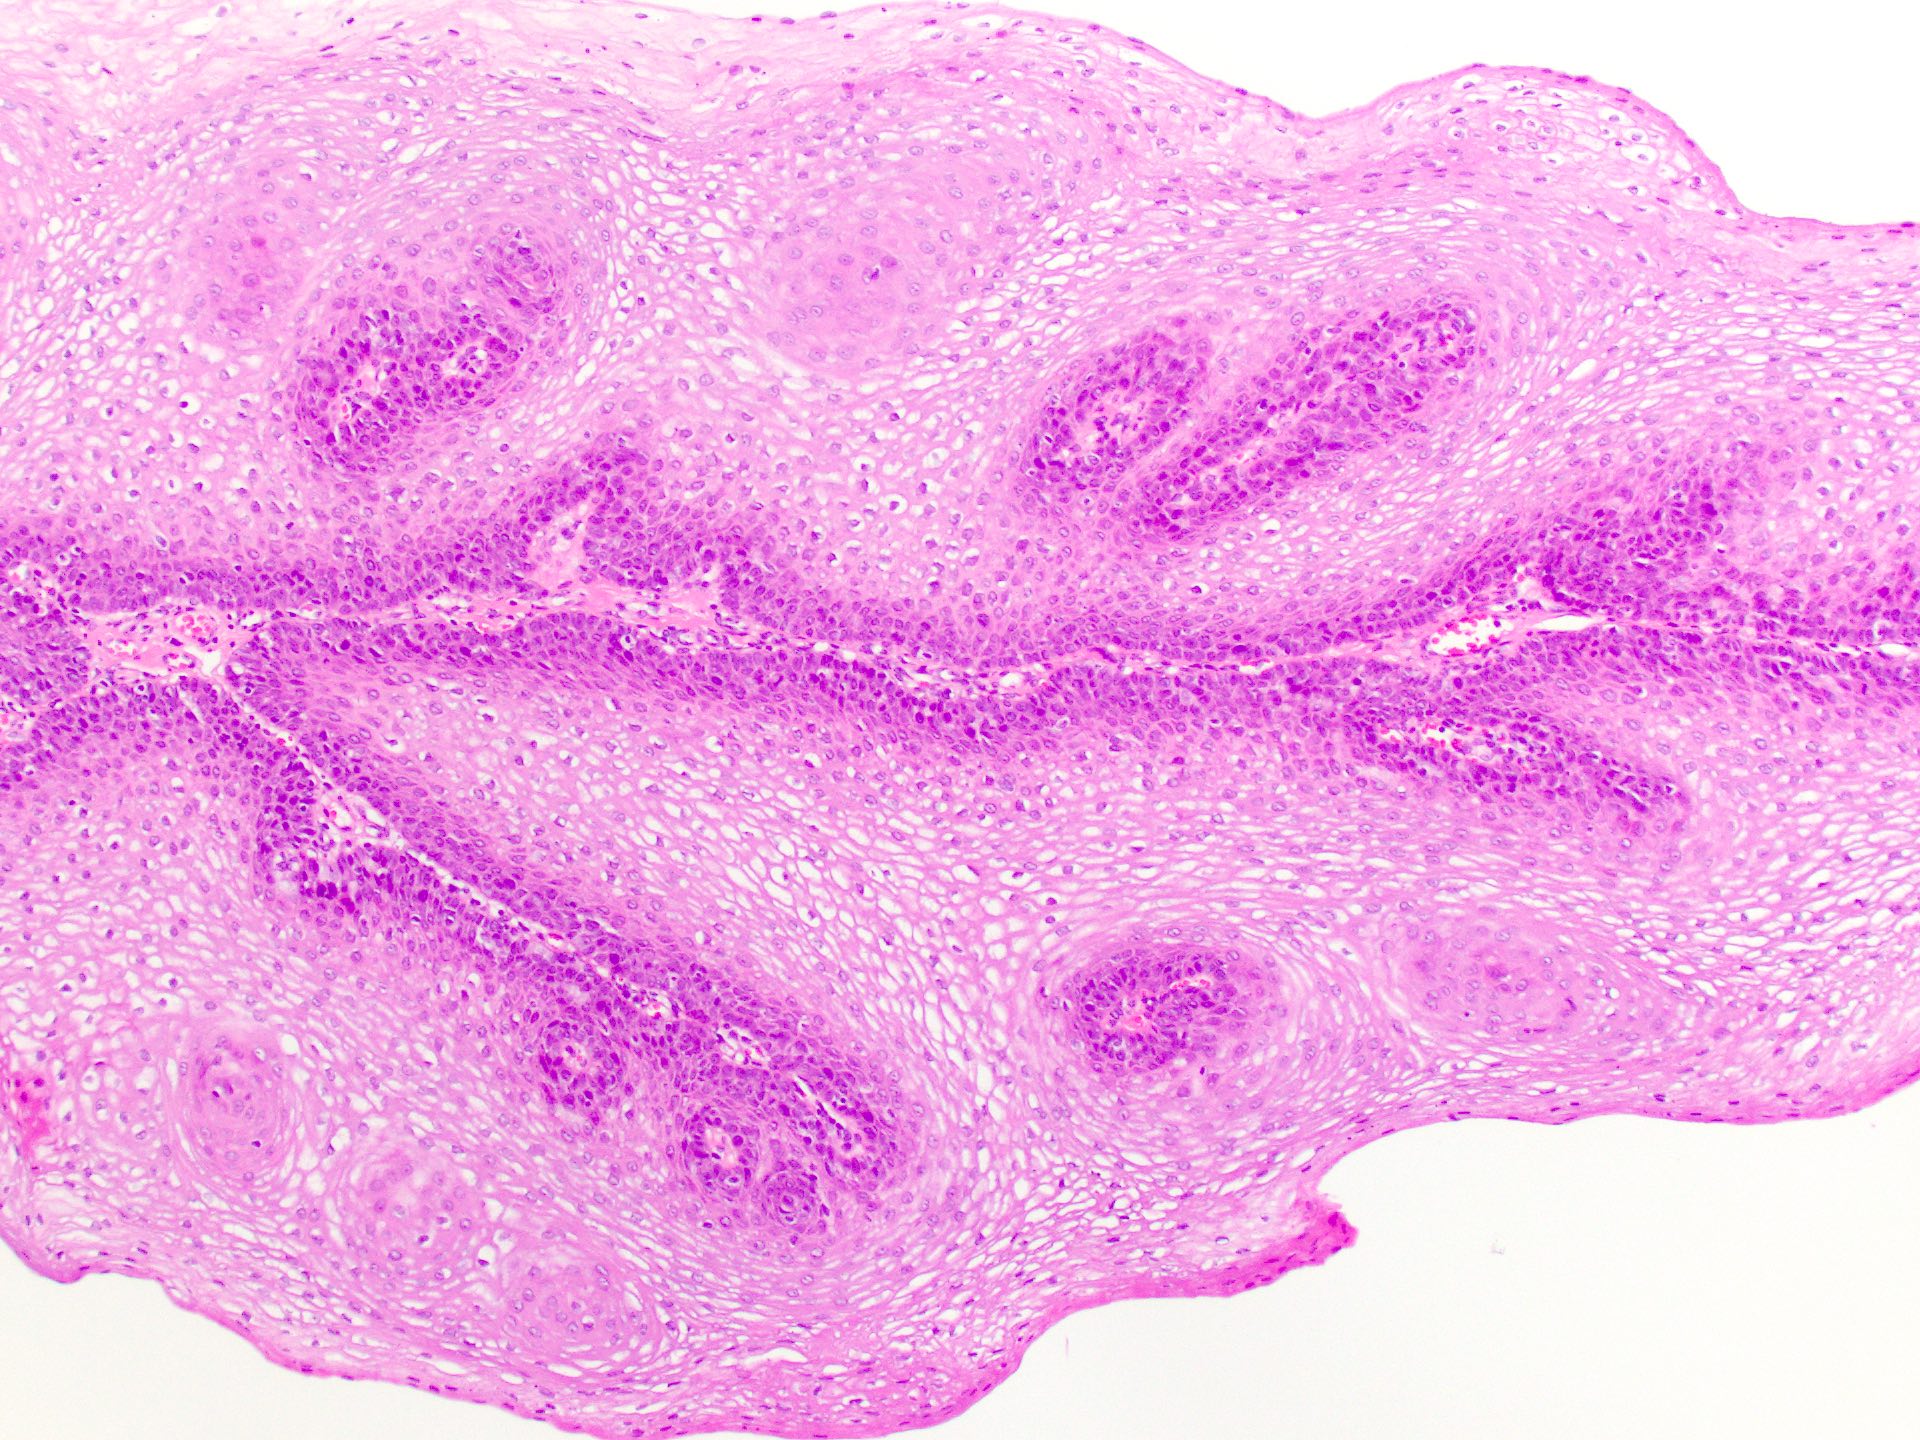 papillomatosis pathology outlines paraziți și papiloame pe corp